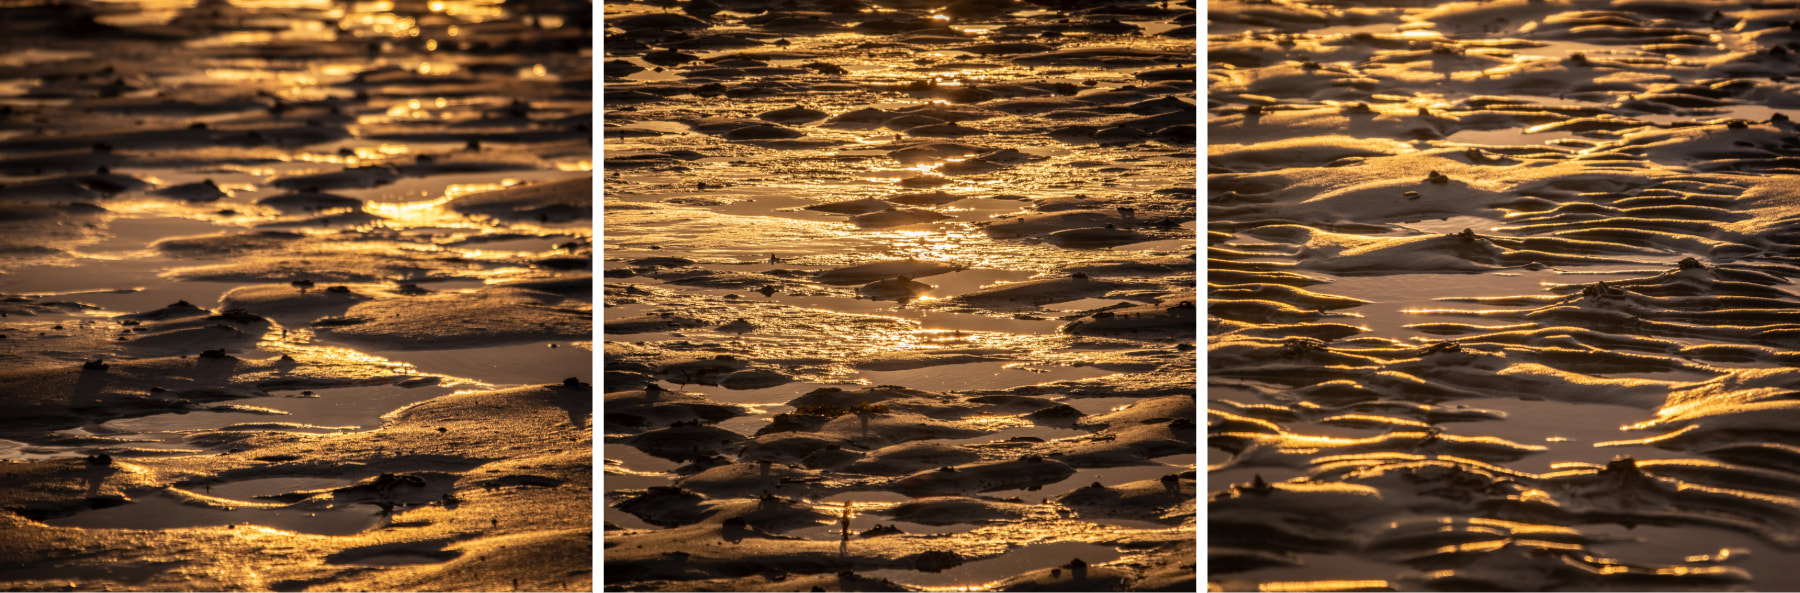 Sands on the beach at Samalaman Bay near Glenuig during a golden summer sunset | Moidart, Scotland | Steven Marshall Photography